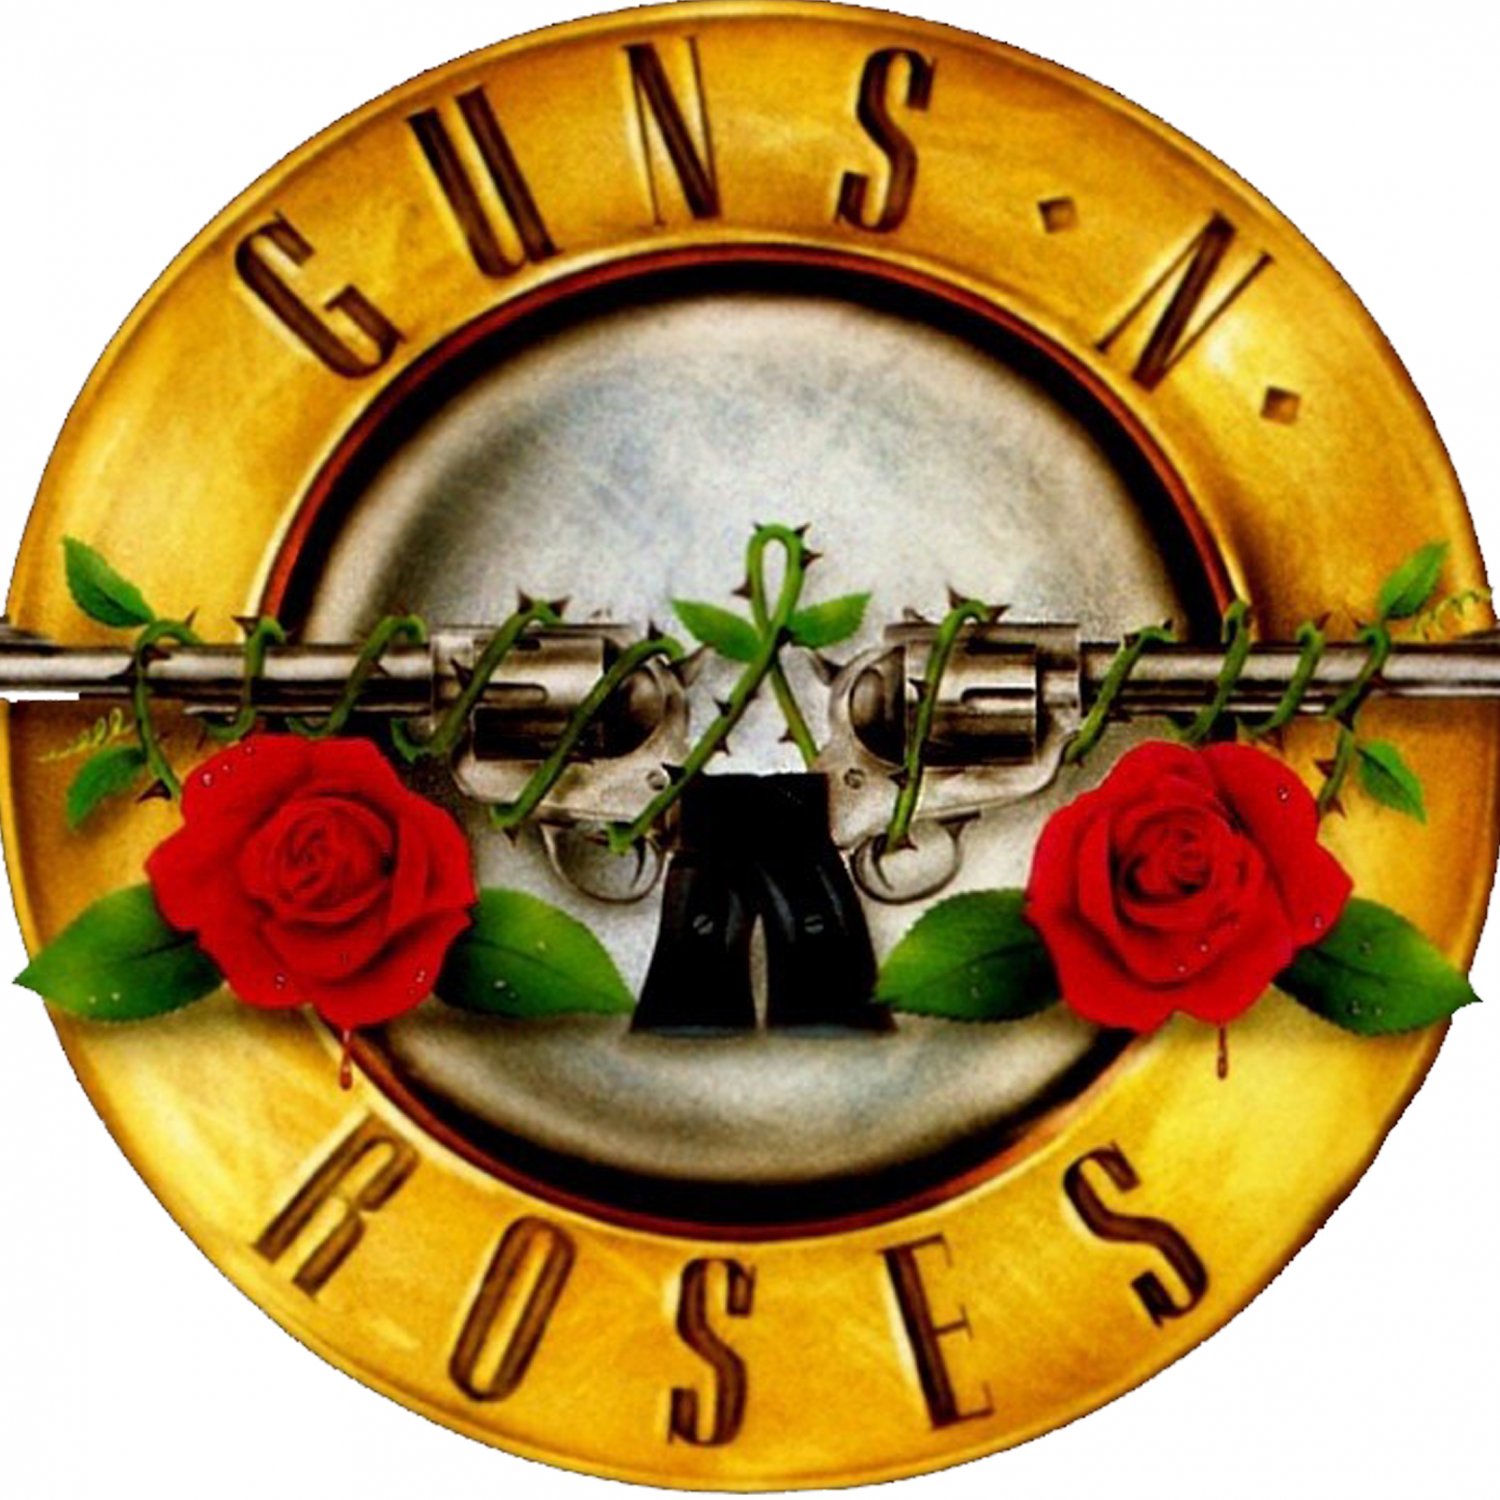 The Guns N Roses Music Video Archive (1 DVD) 24 Music Videos